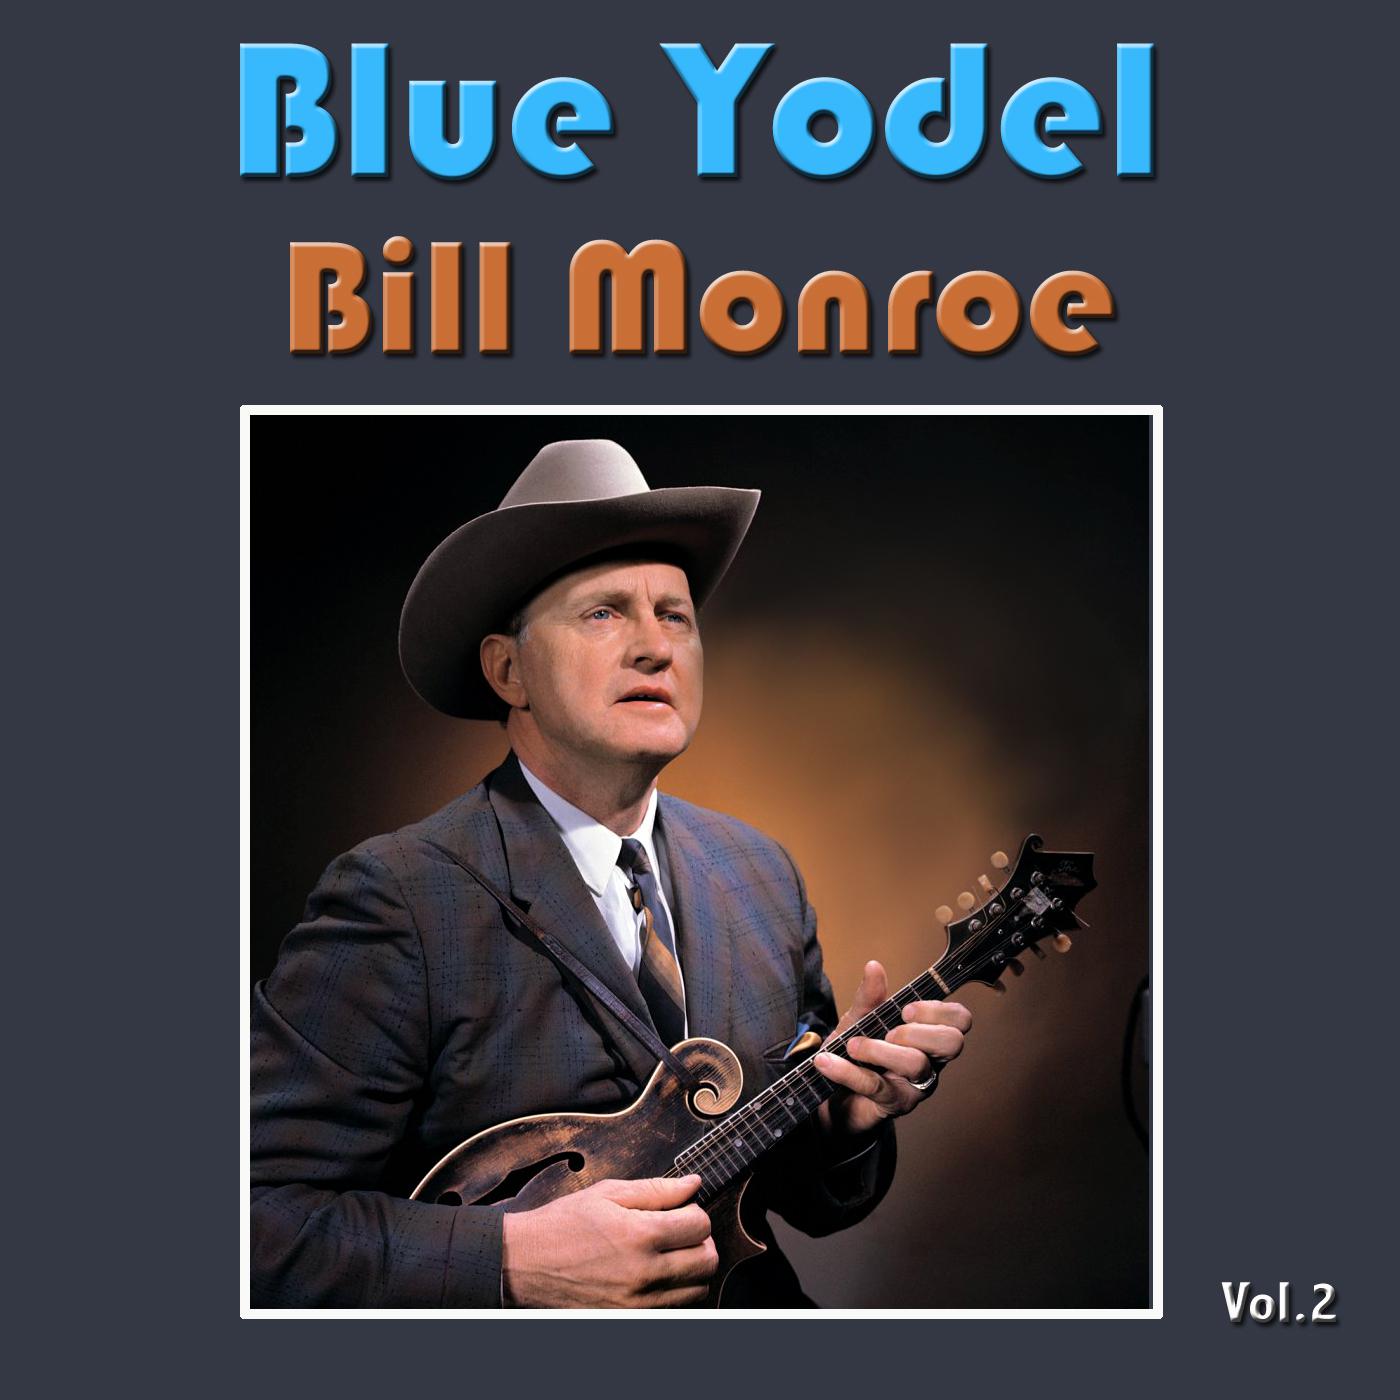 Blue Yodel, Vol. 2